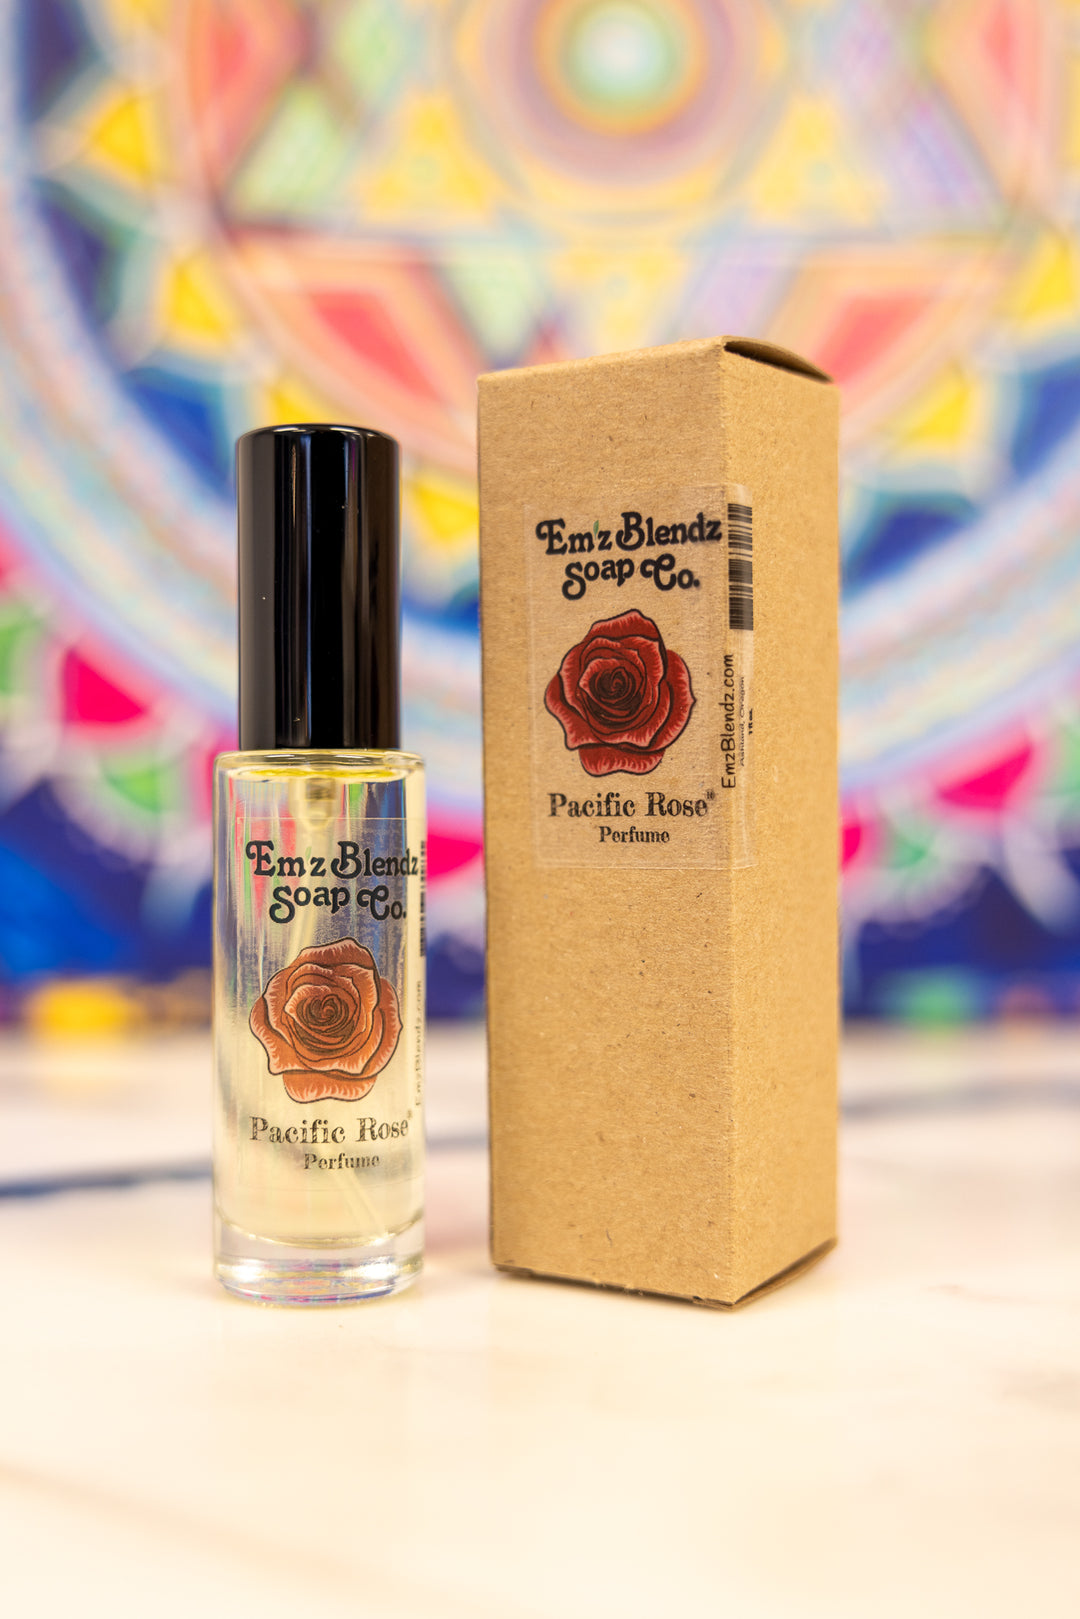 Pacific Rose Perfume by Em’z Blendz